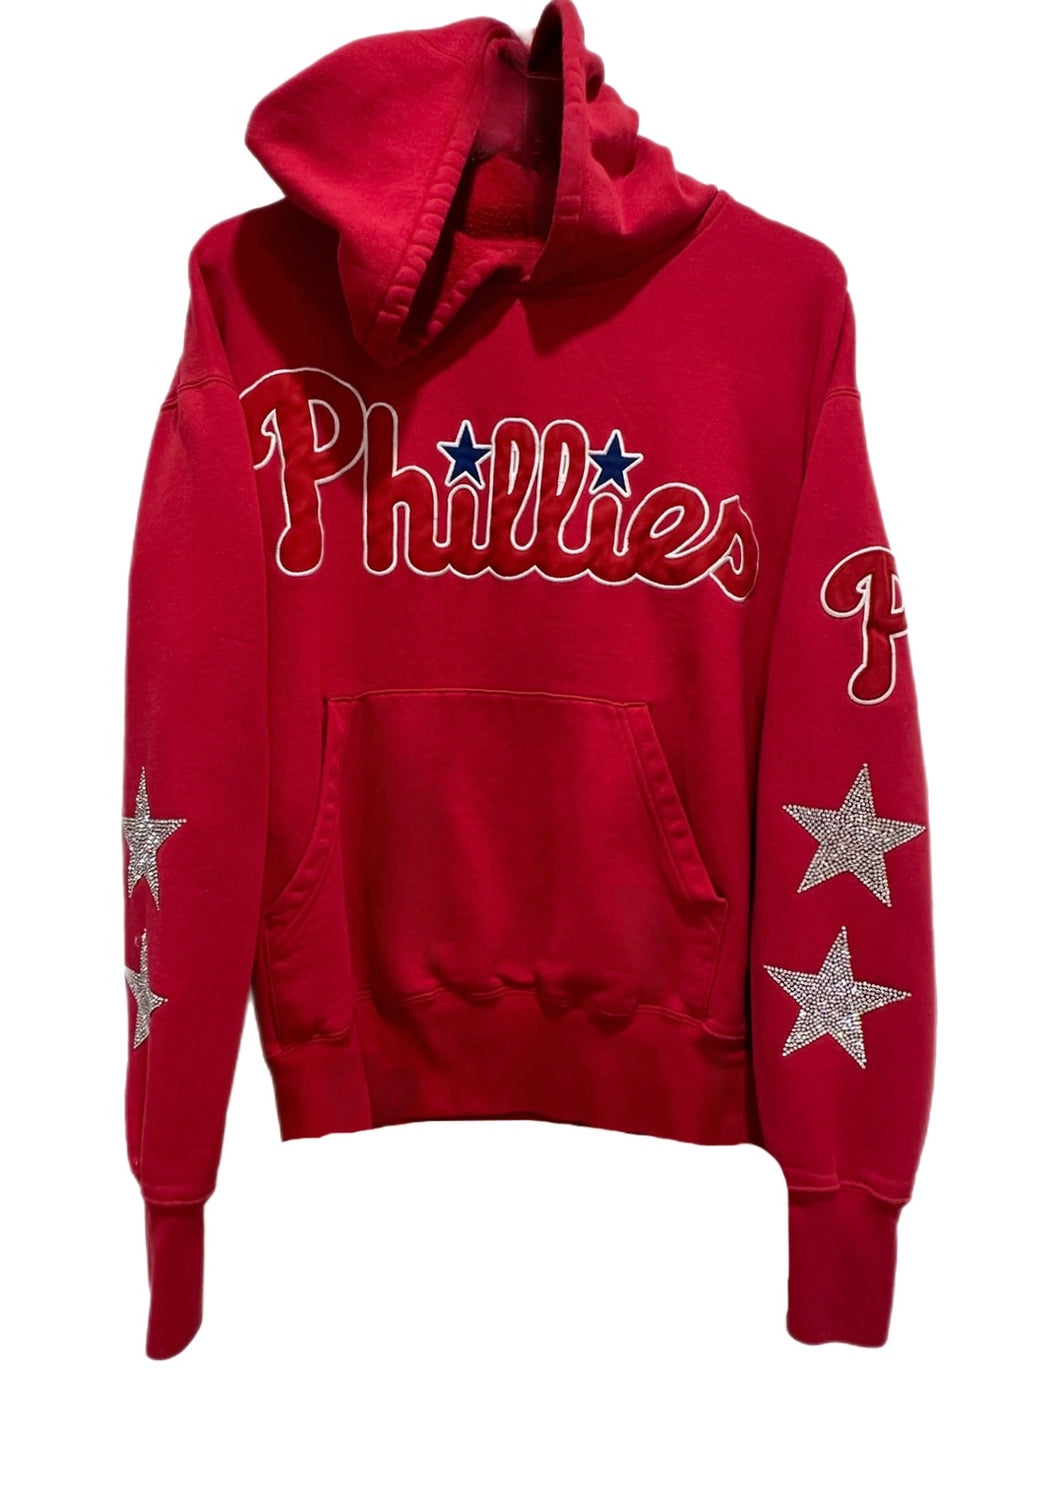 Philadelphia Phillies, MLB One of a KIND Vintage Hoodie with Crystal Star Design